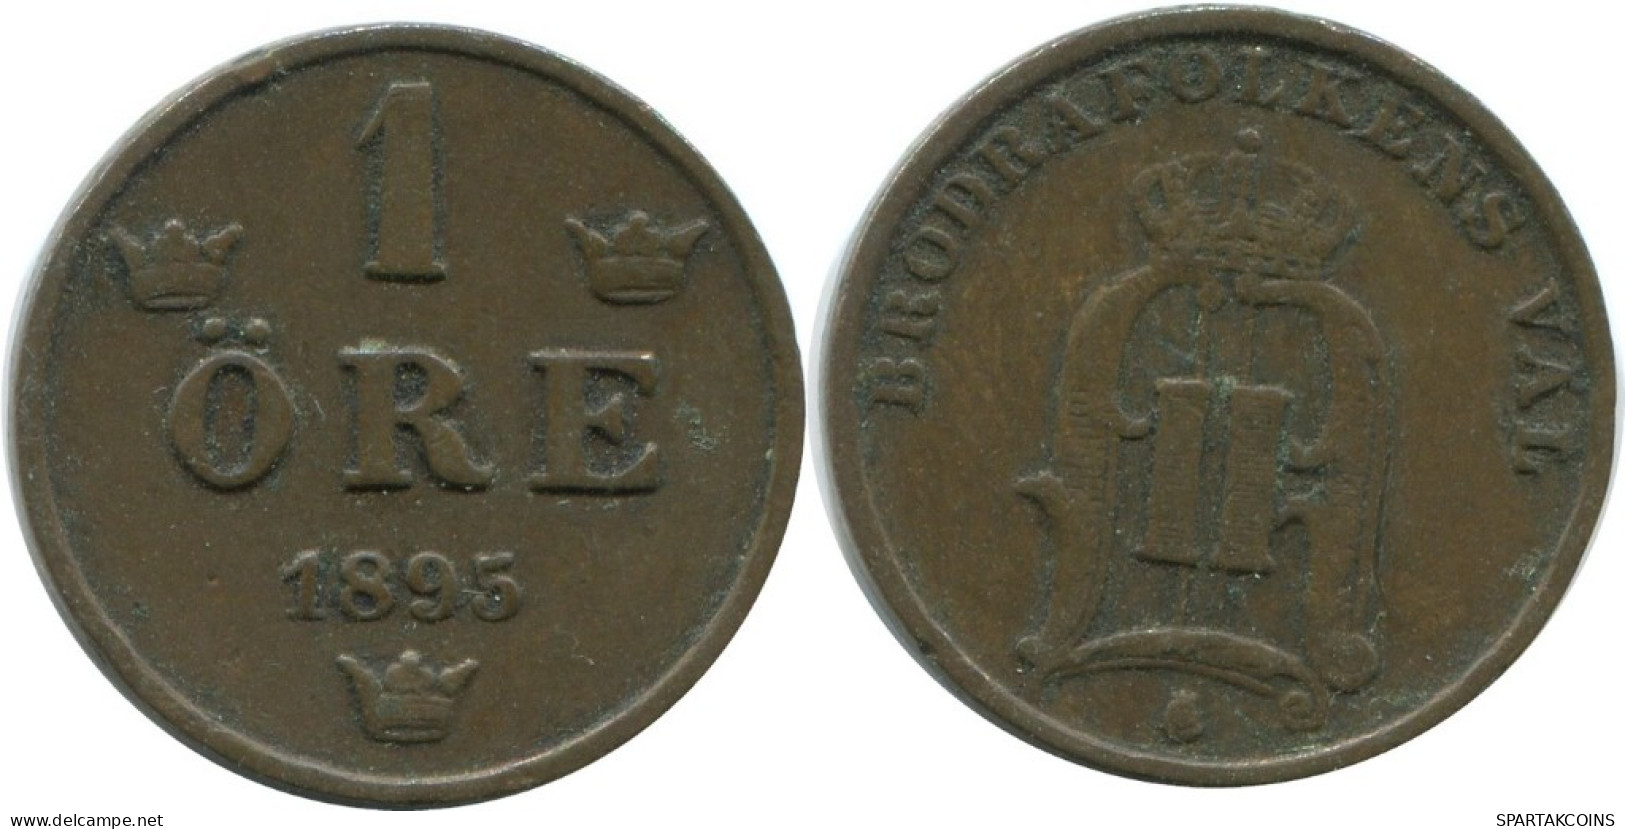 1 ORE 1895 SWEDEN Coin #AD366.2.U.A - Zweden